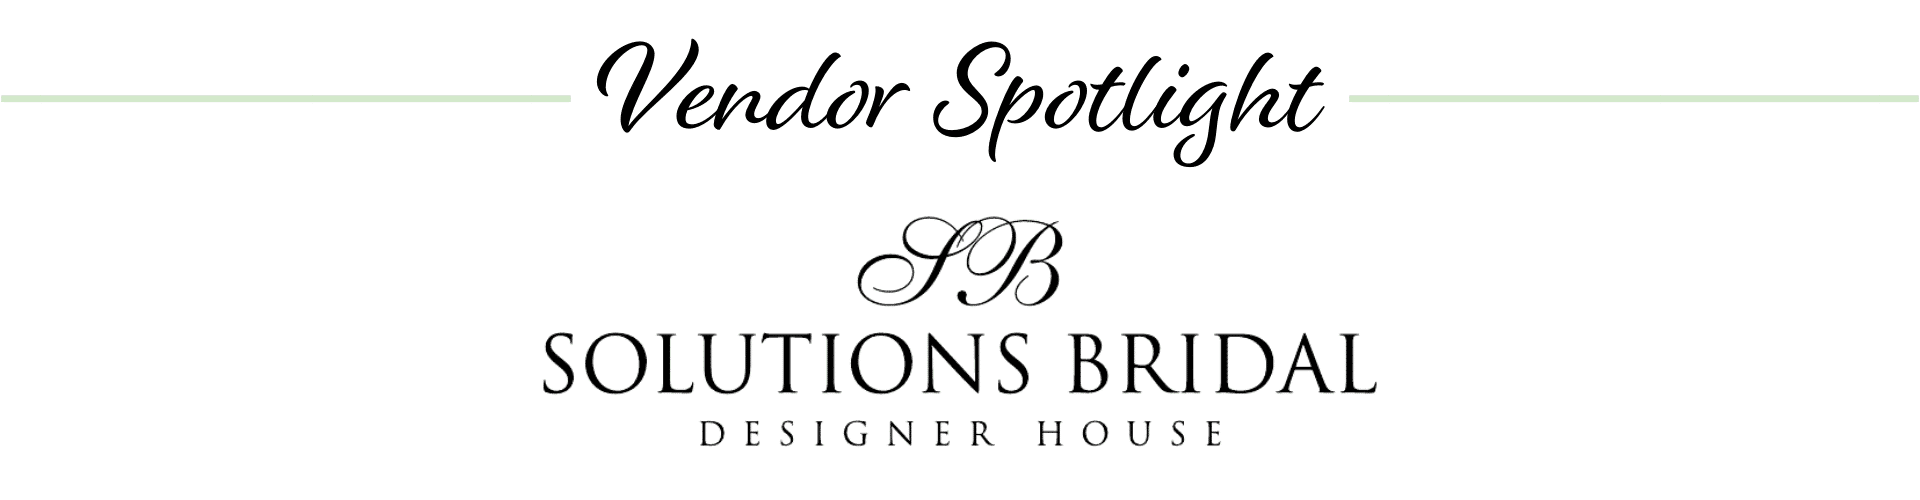 Solutions Bridal logo